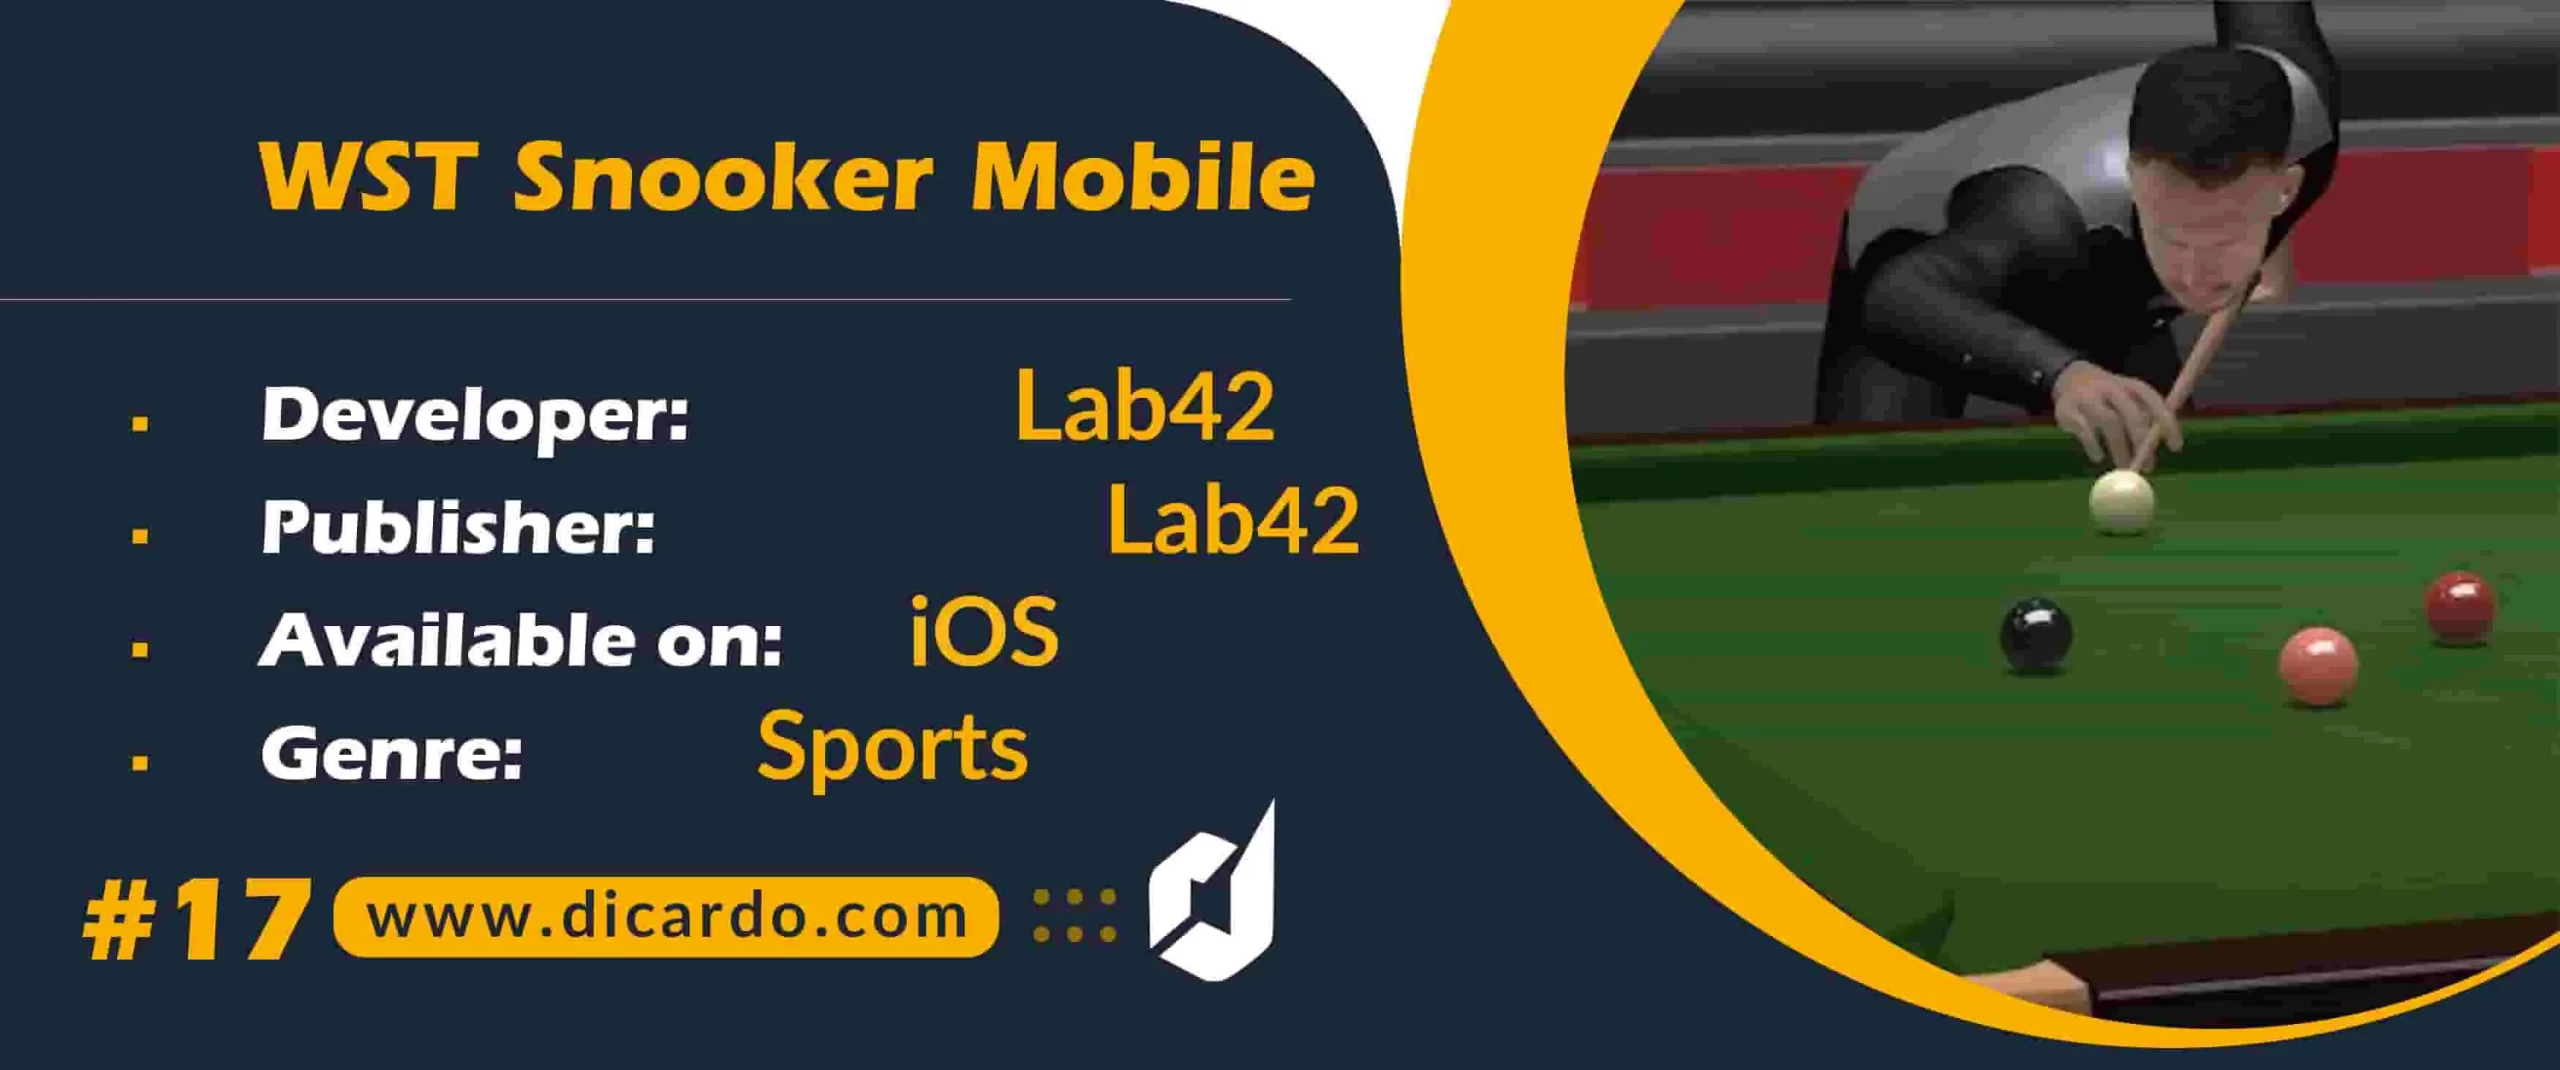 #17 دبلیو اس تی اسنوکر موبایل WST Snooker Mobile